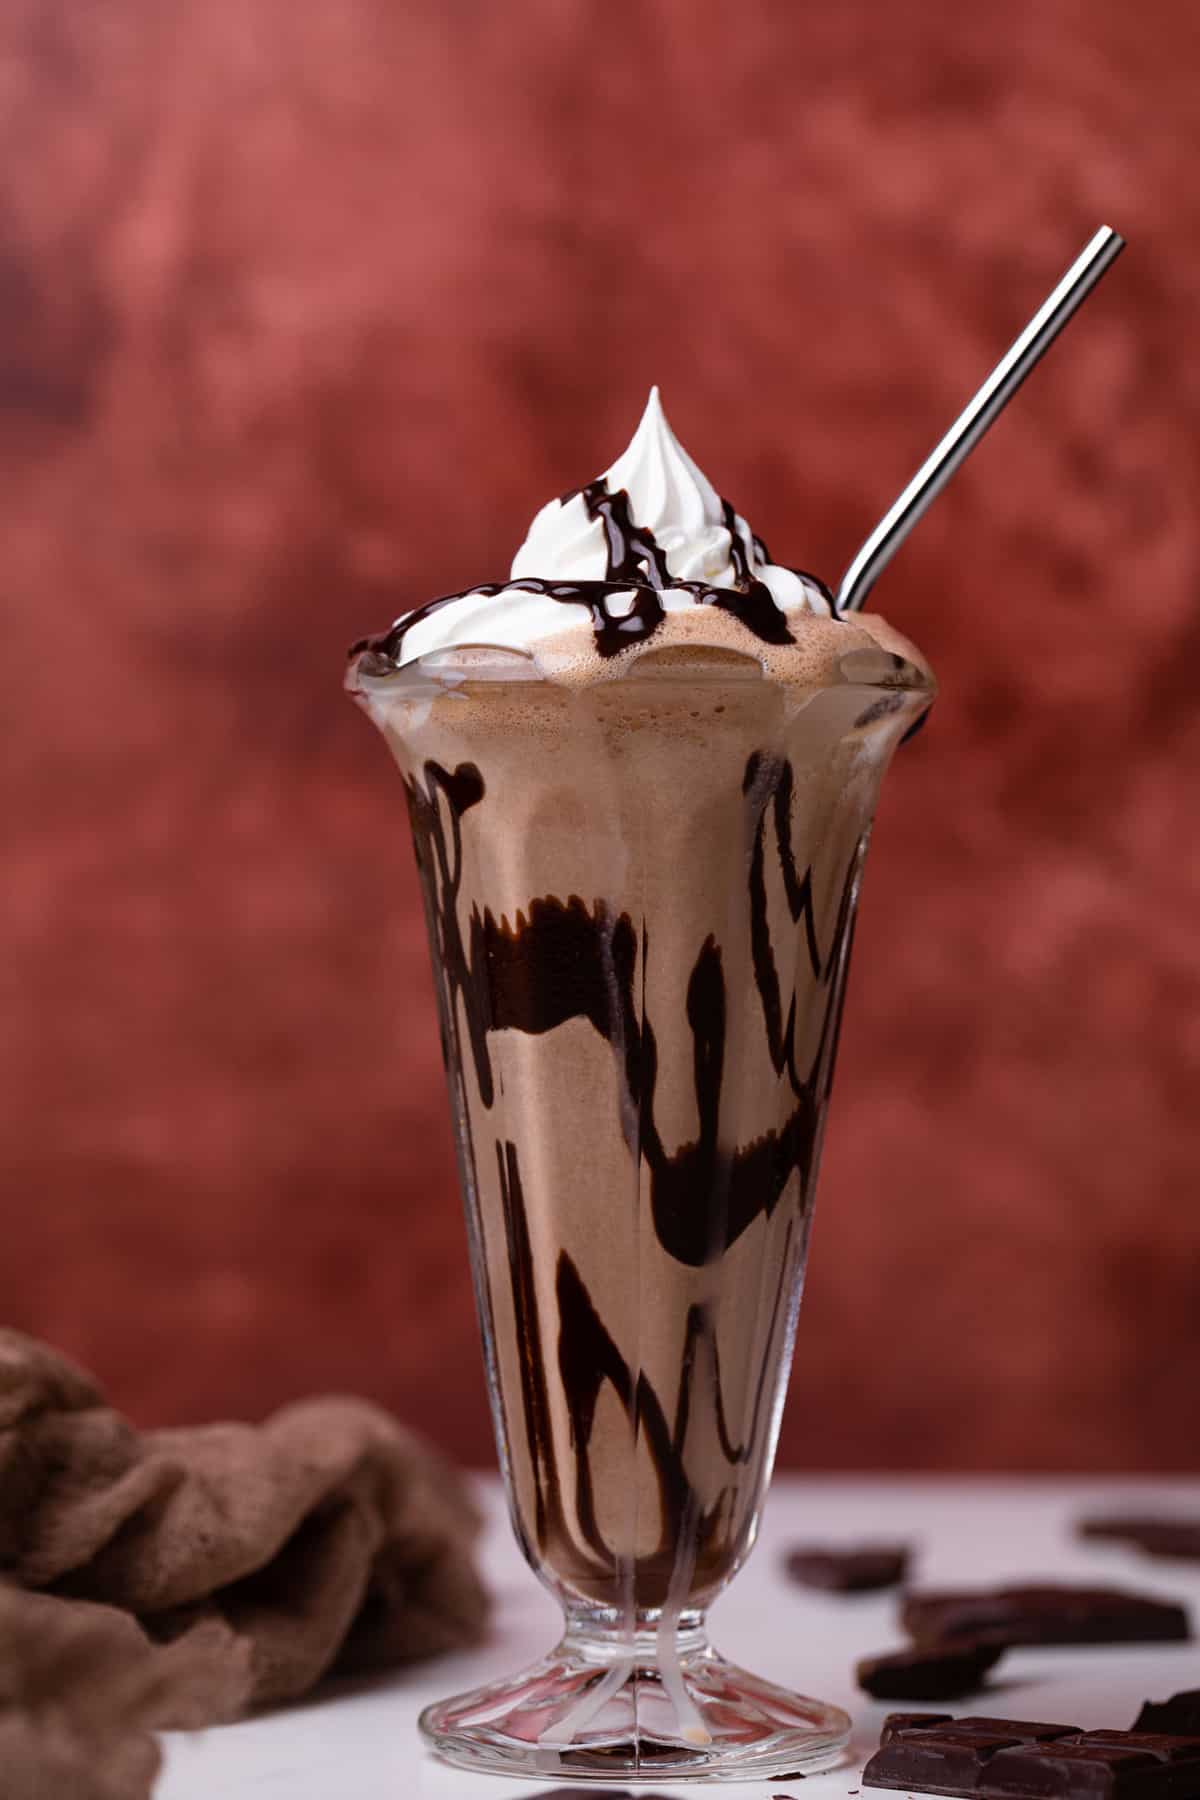 Metal straw in a Dairy-Free Peanut Butter Chocolate Milkshake.